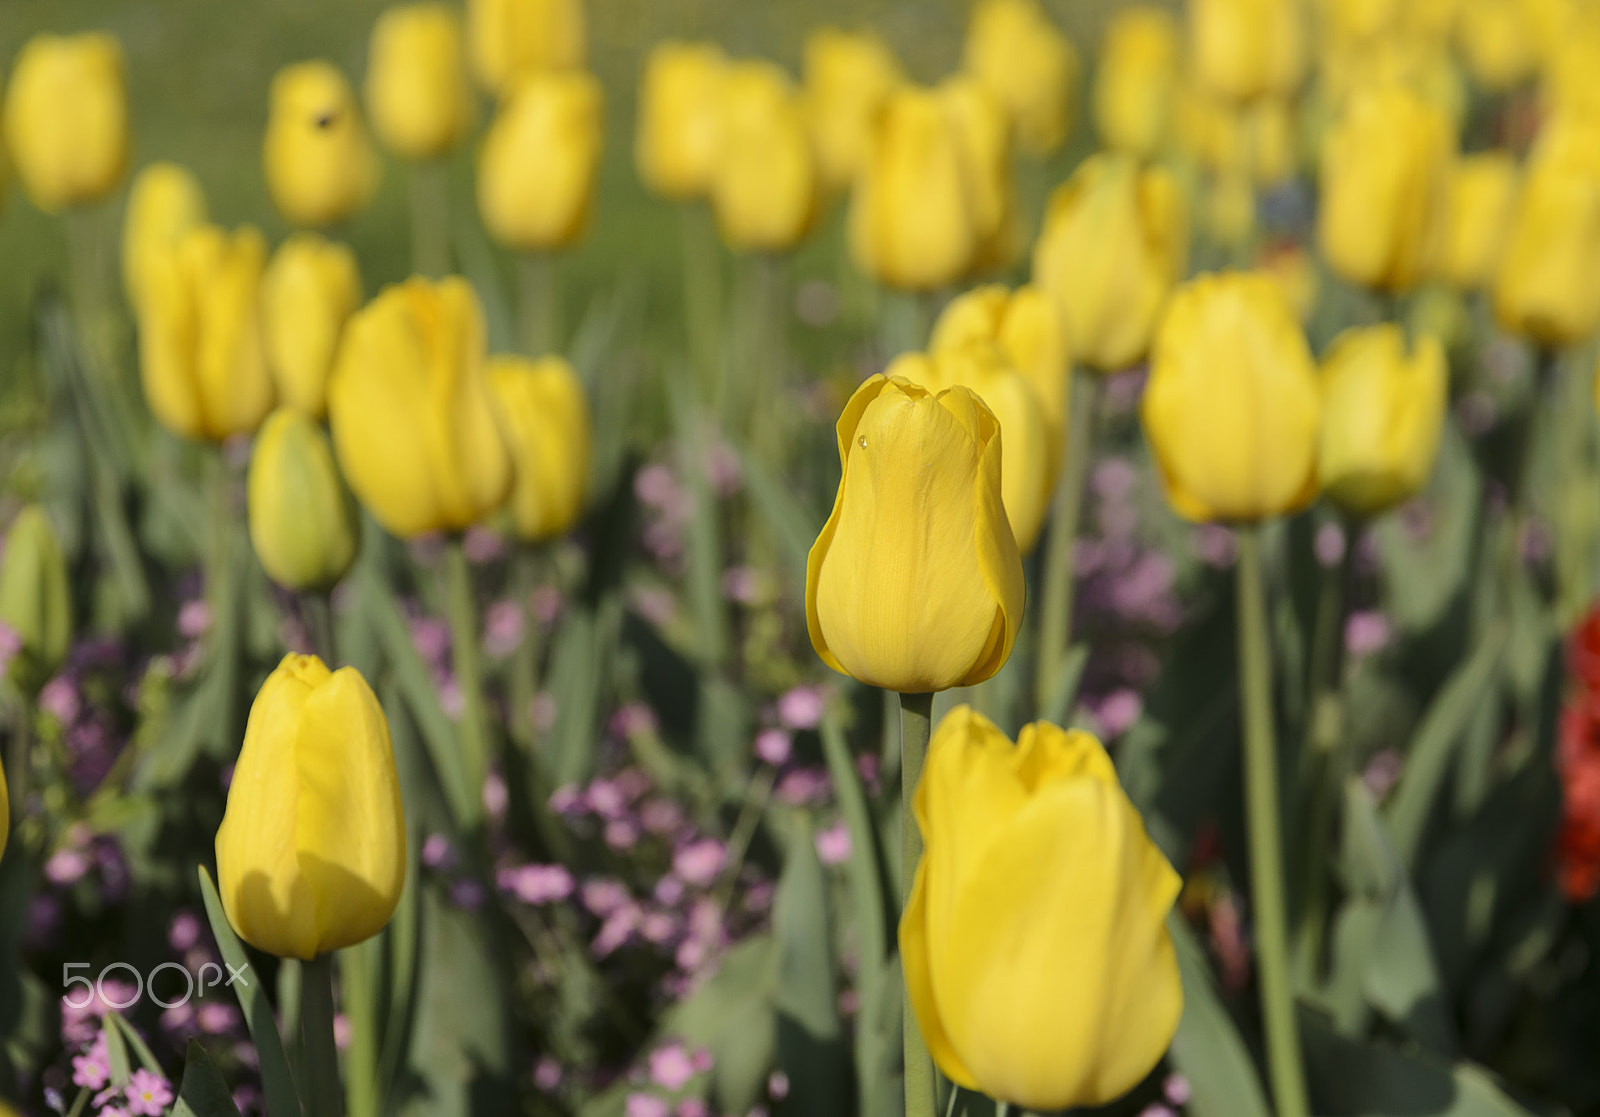 Nikon D7000 + Sigma 17-70mm F2.8-4 DC Macro OS HSM | C sample photo. City garden with yellow tulips photography